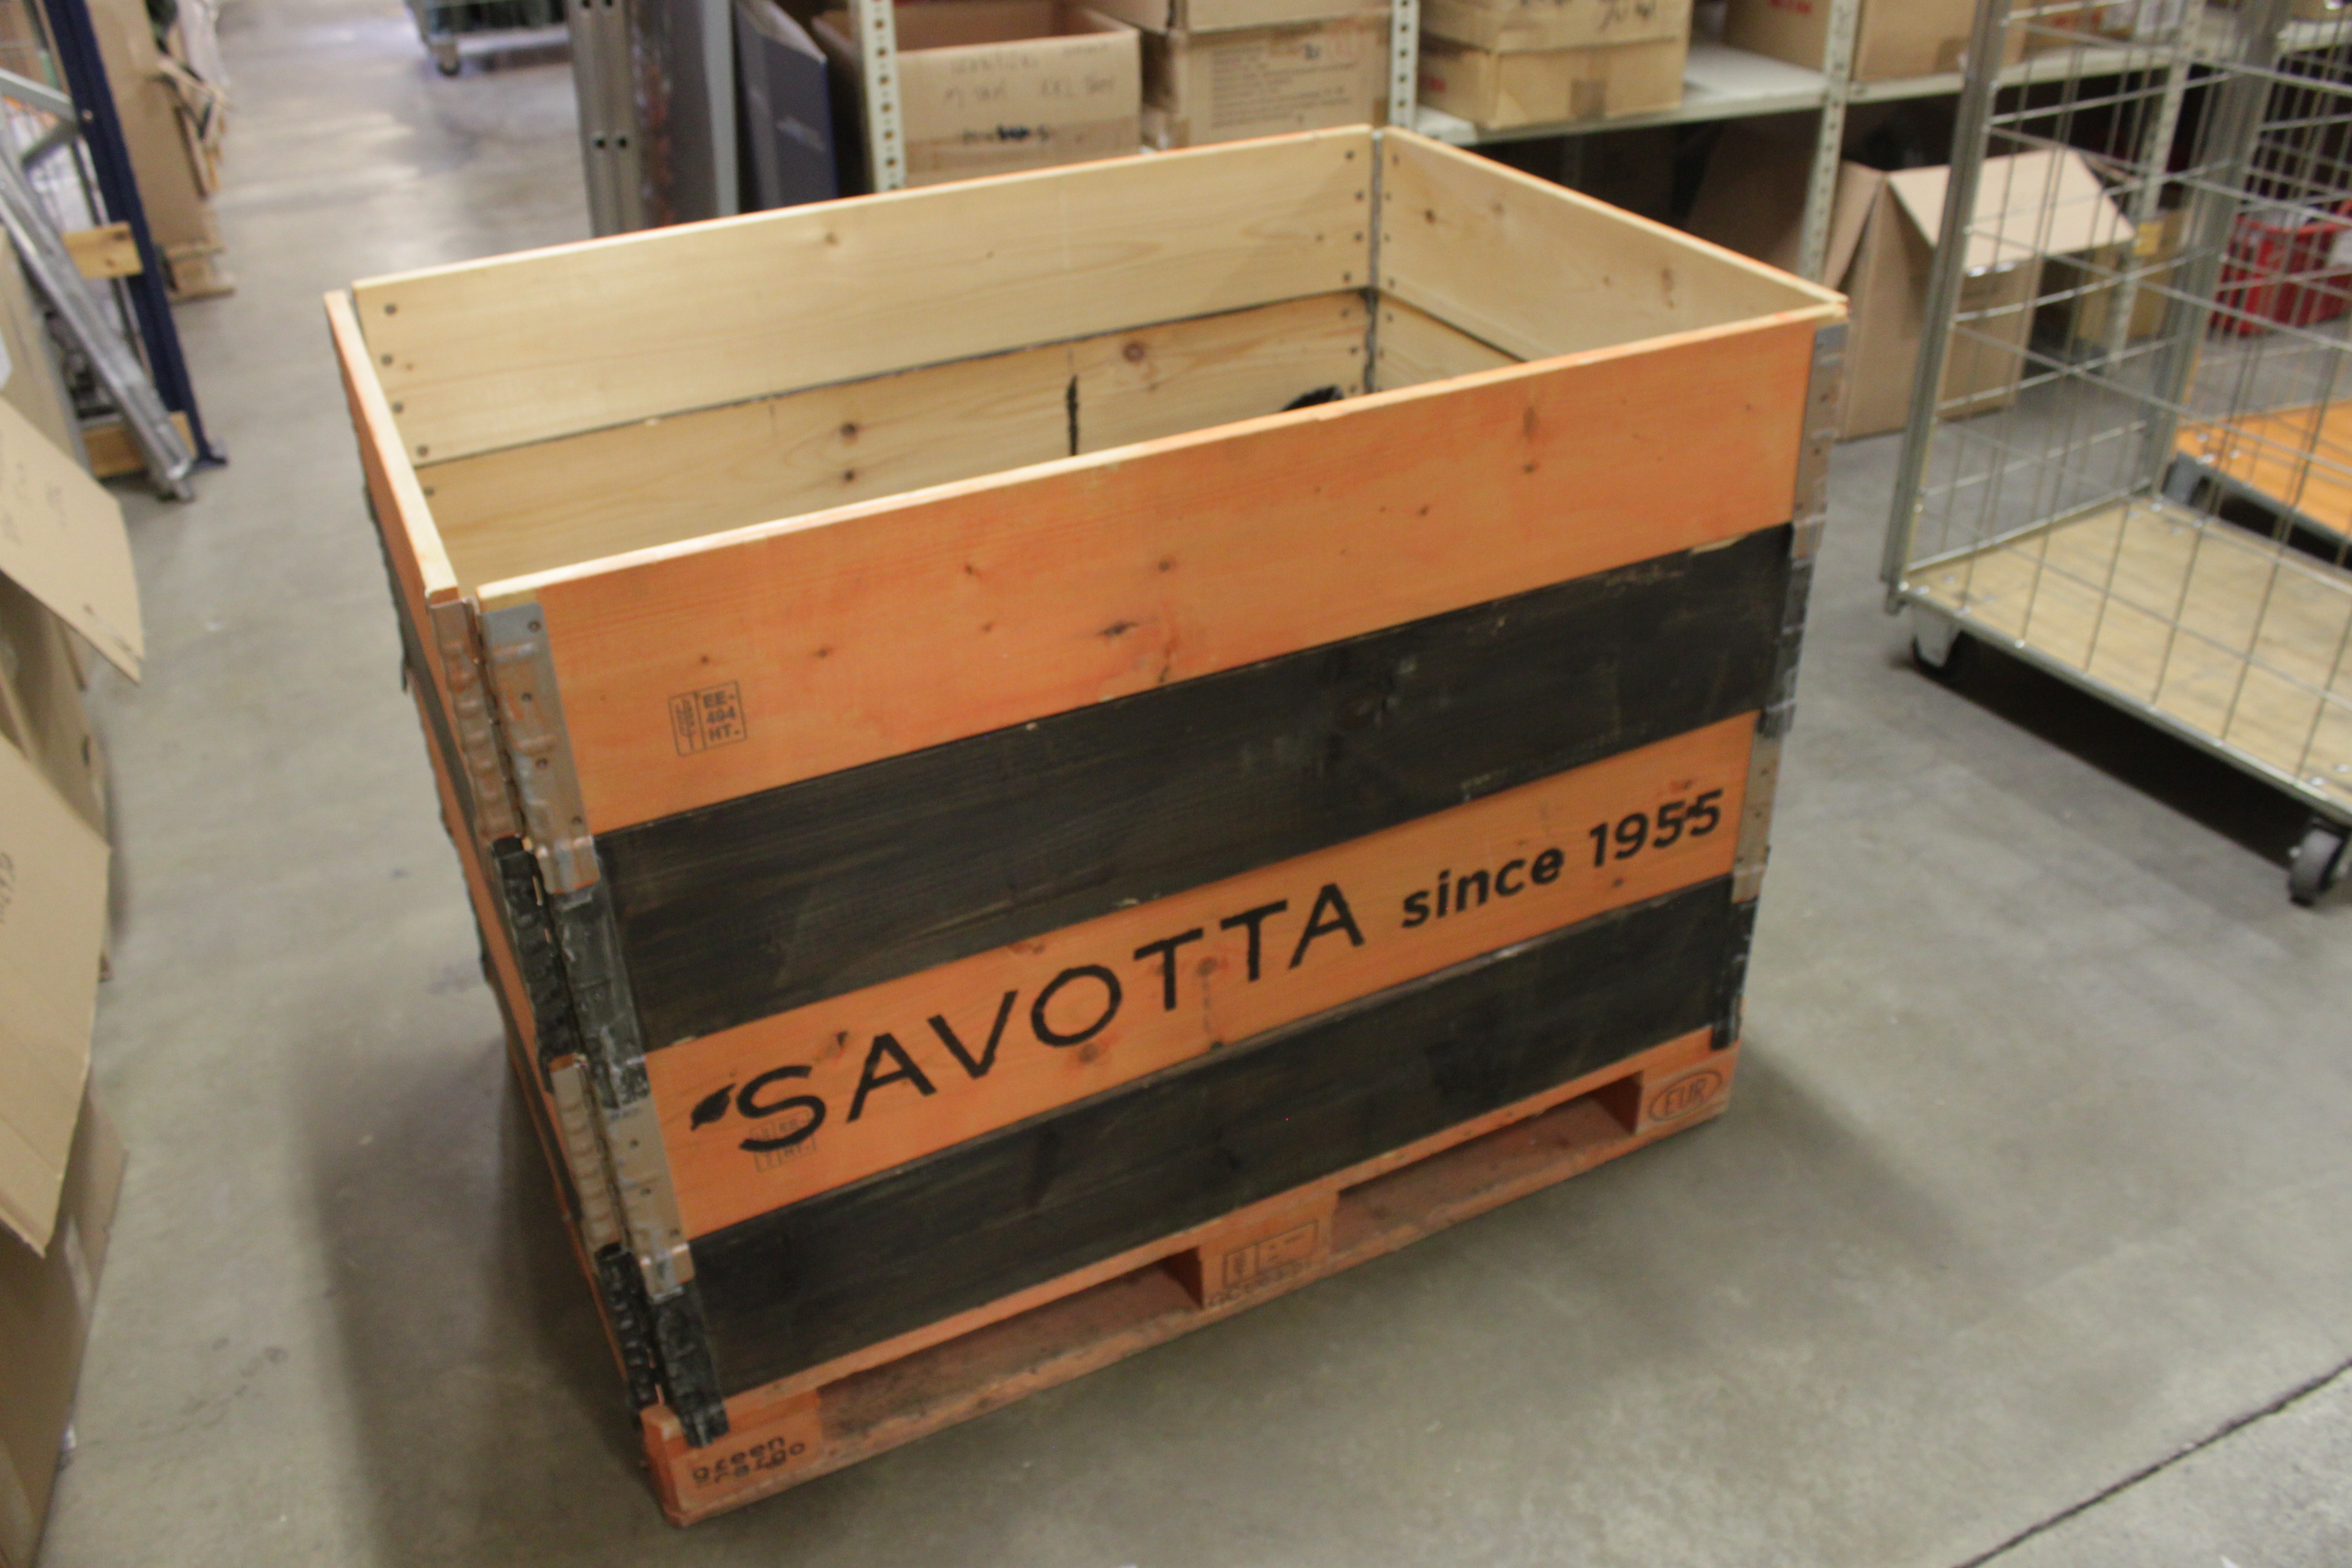 Noble and blue Savotta box